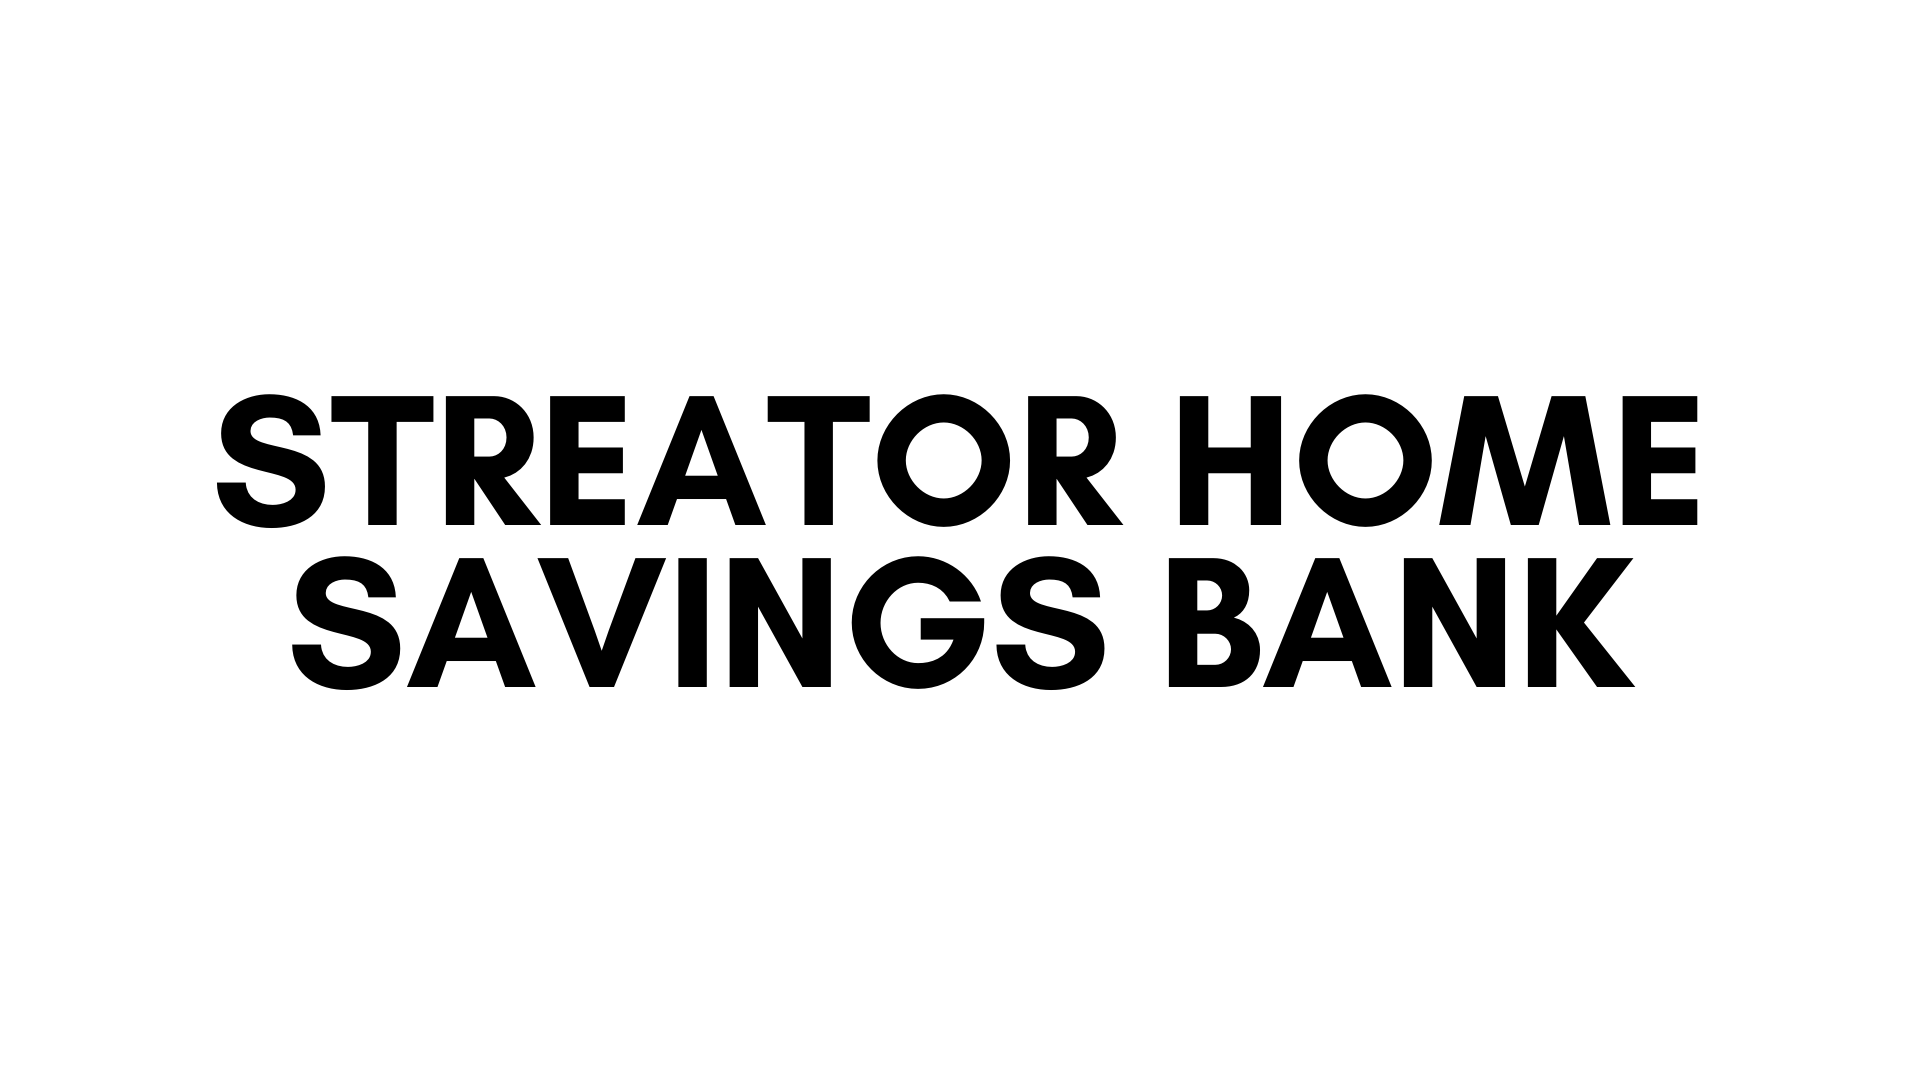 STREATOR HOME SAVINGS BANK